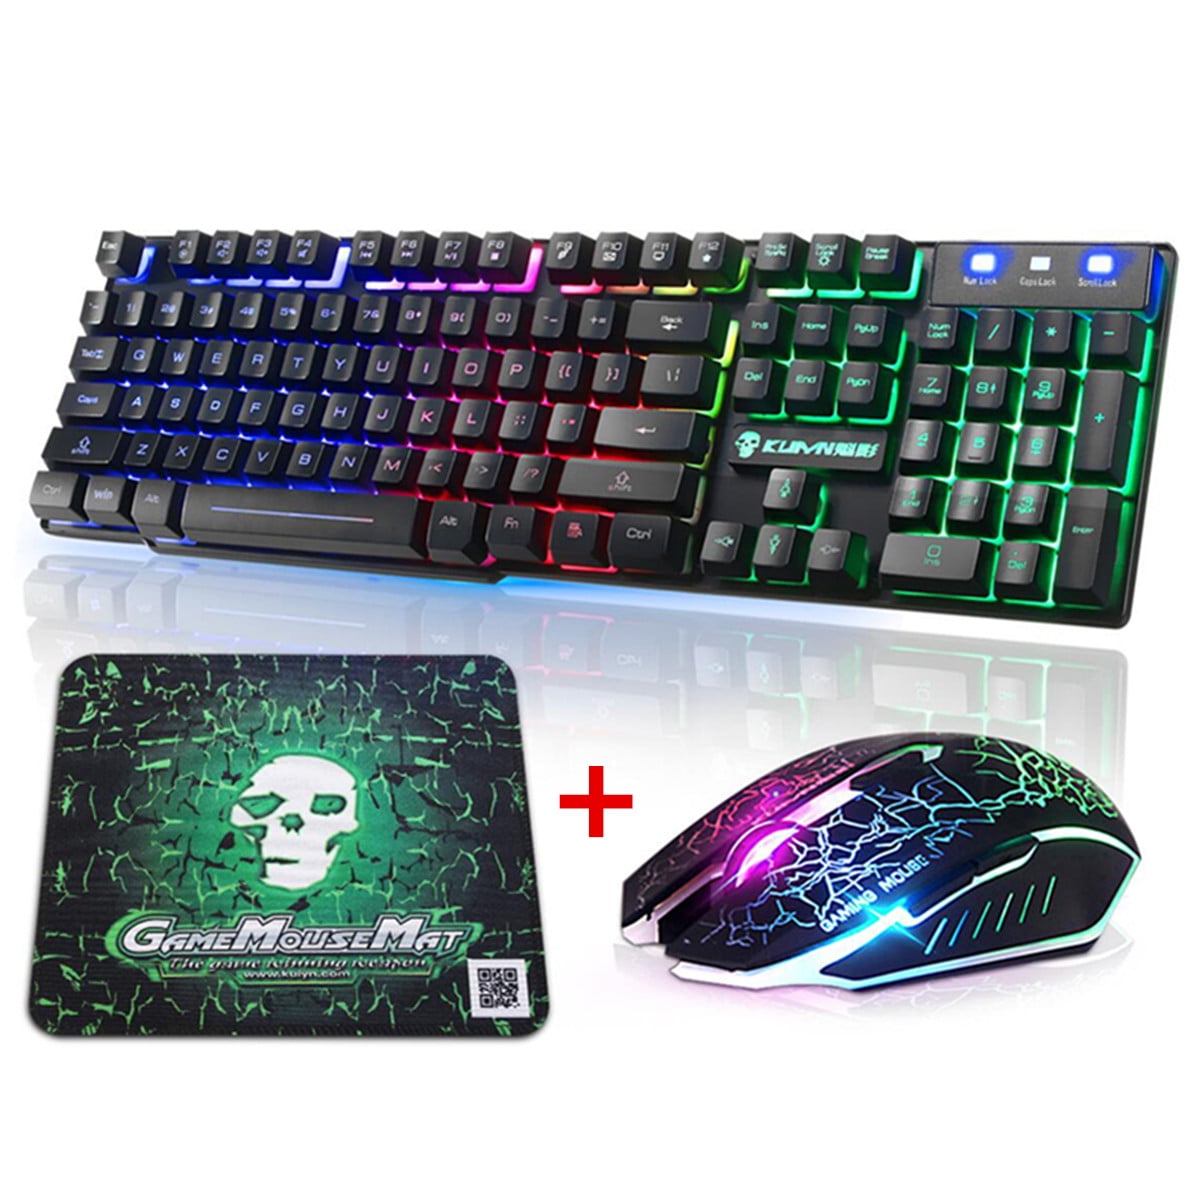 RGB Backlit Keyboard & Mouse Kit 3 Color Rainbow LED Illuminated Anti-ghosting 